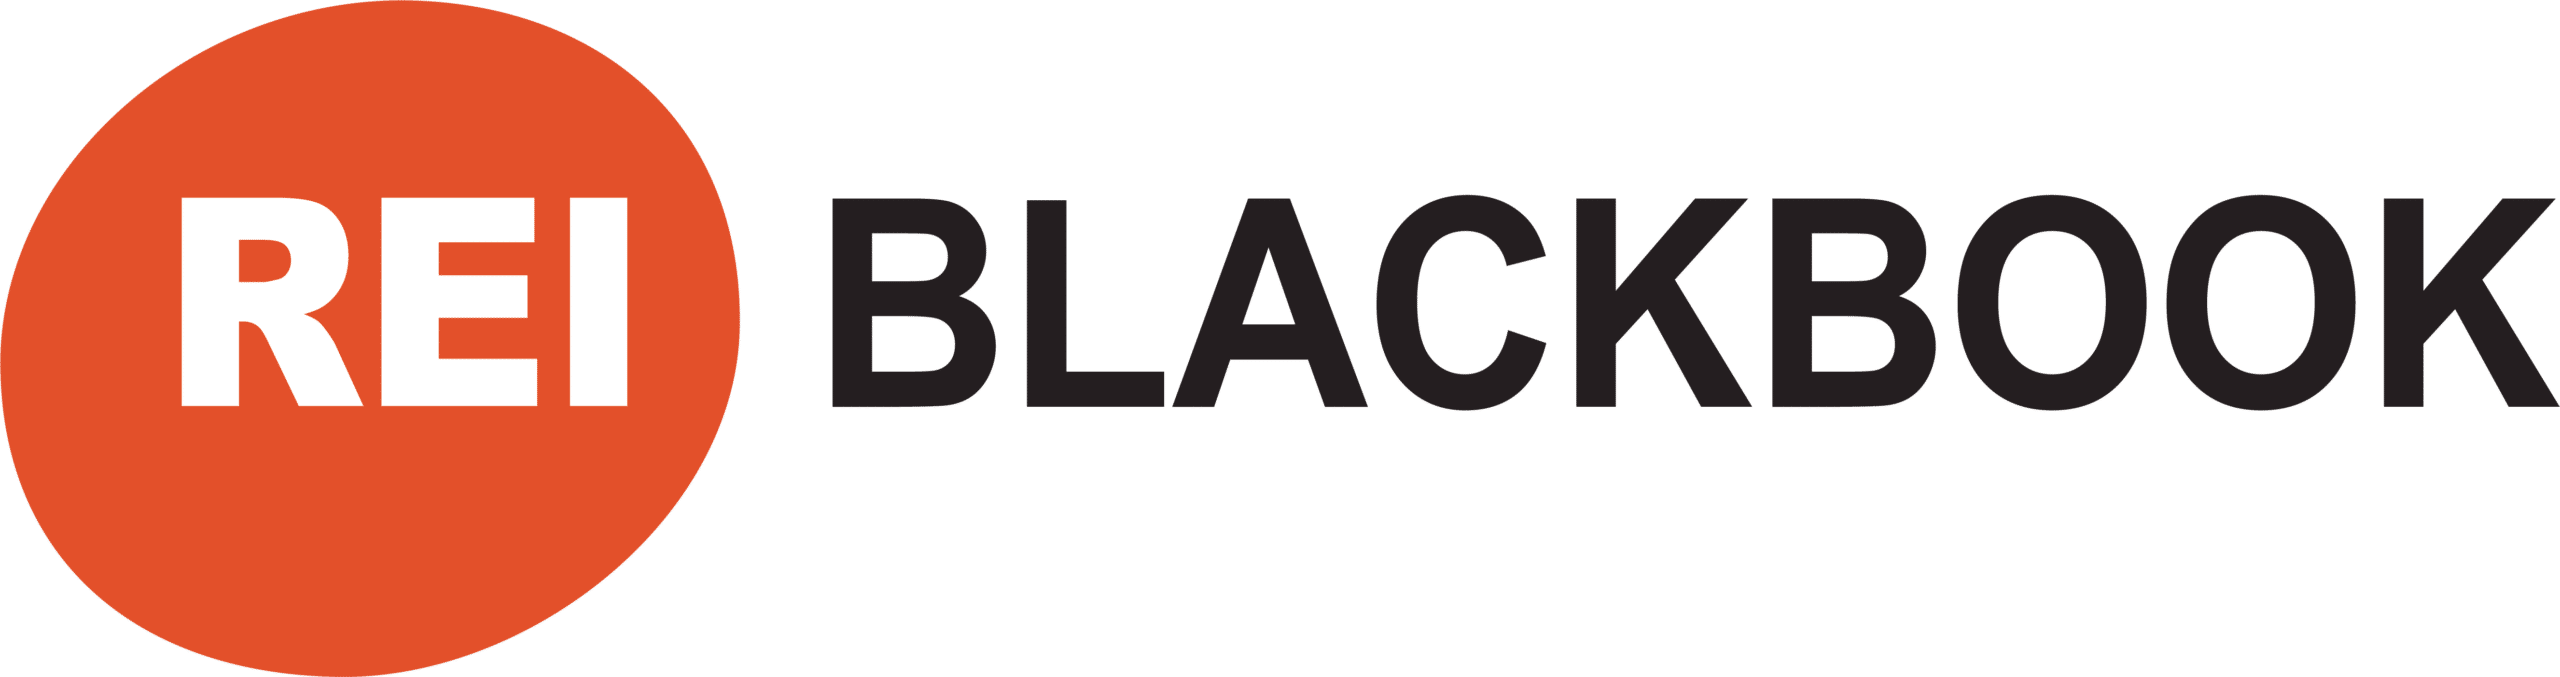 rei-blackbook-logo-black